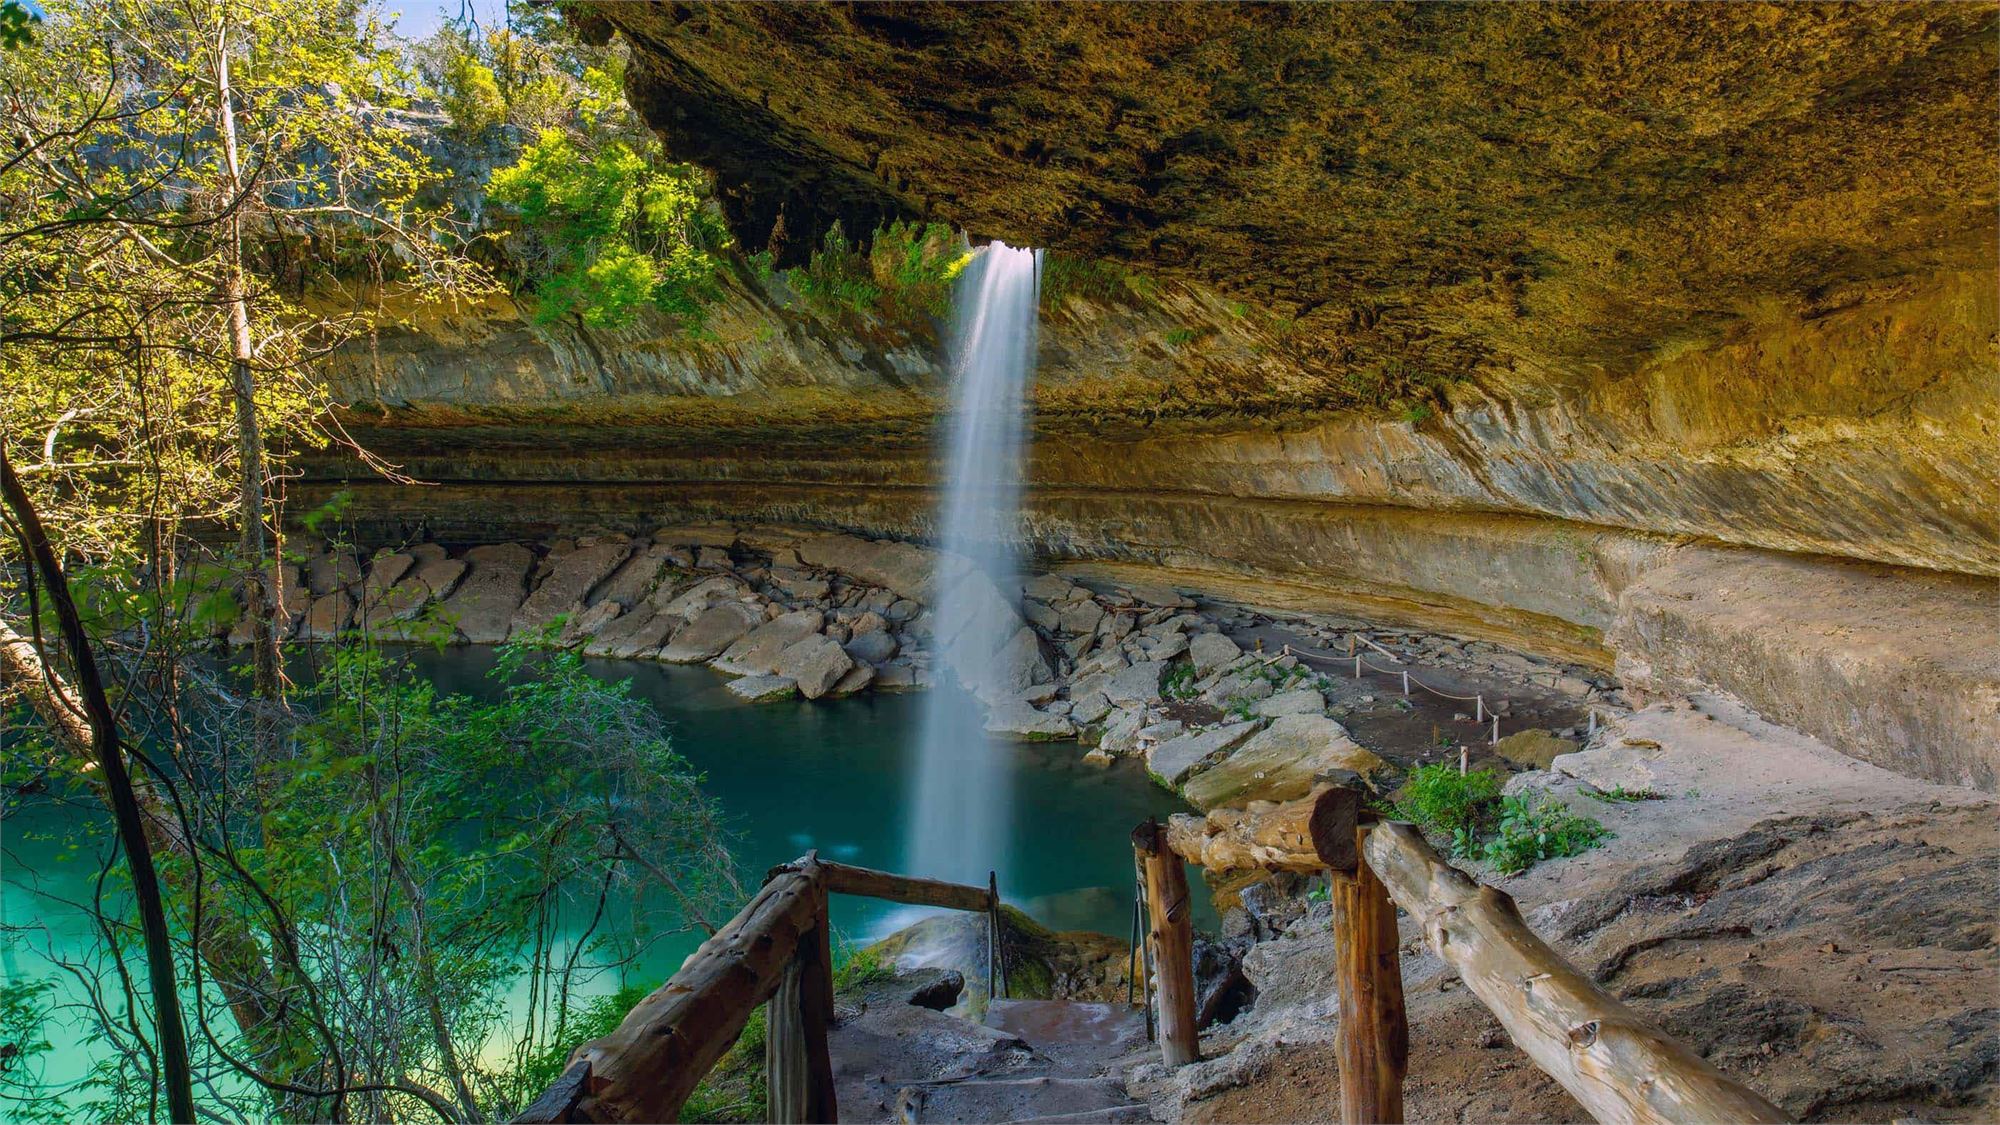 Natural waterfall near Dripping Springs, TX